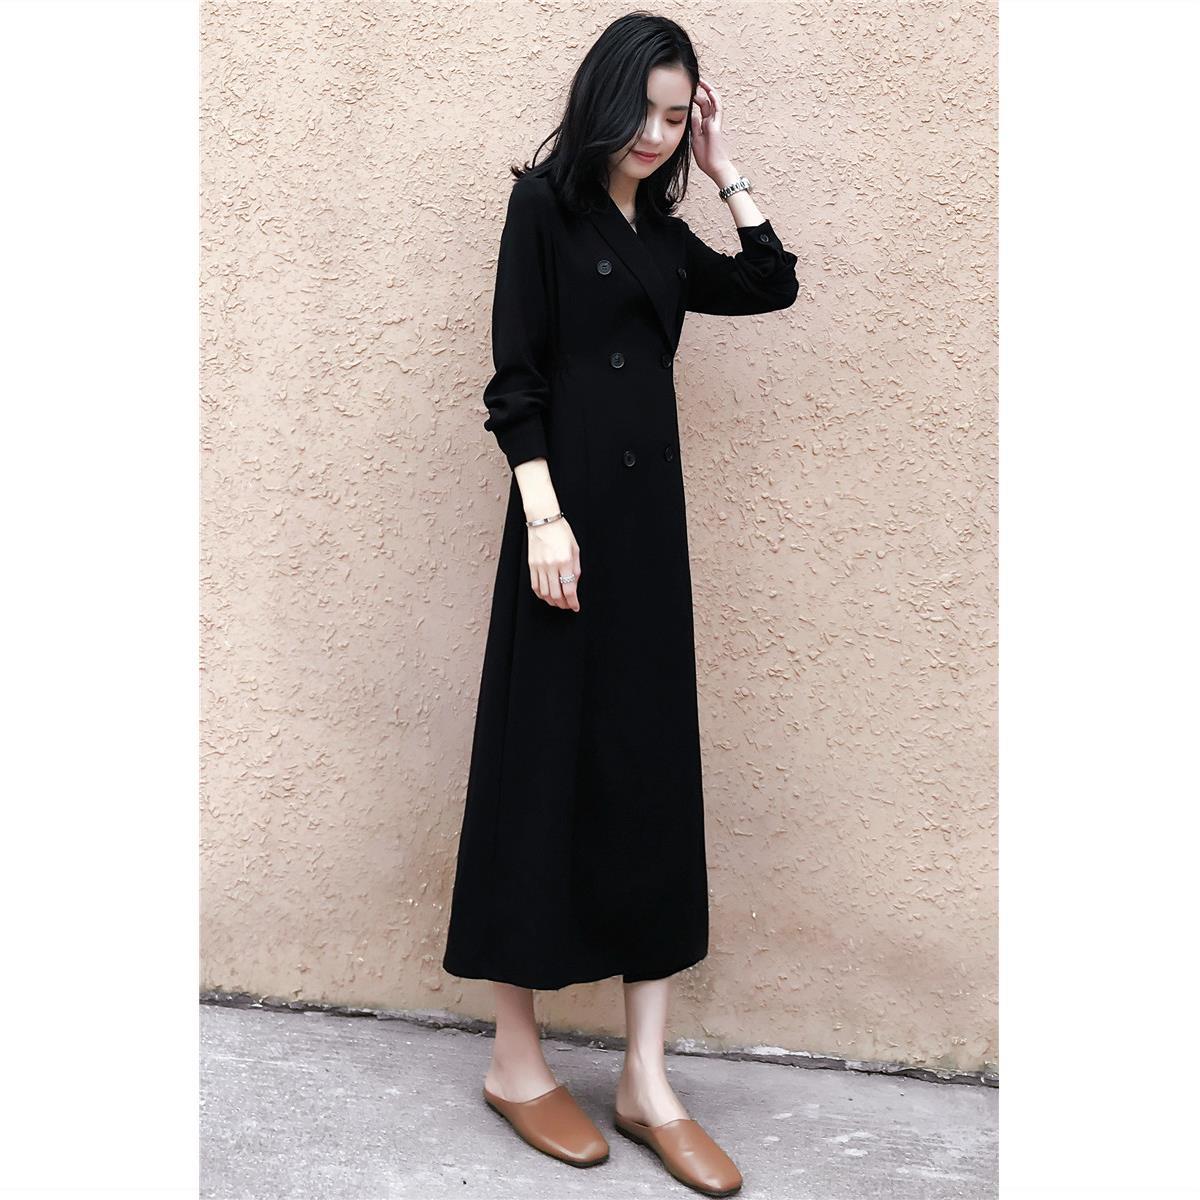 Spring and autumn 2020 new women's Hepburn style long-sleeved Yamamoto French retro skirt long knee-length black dress